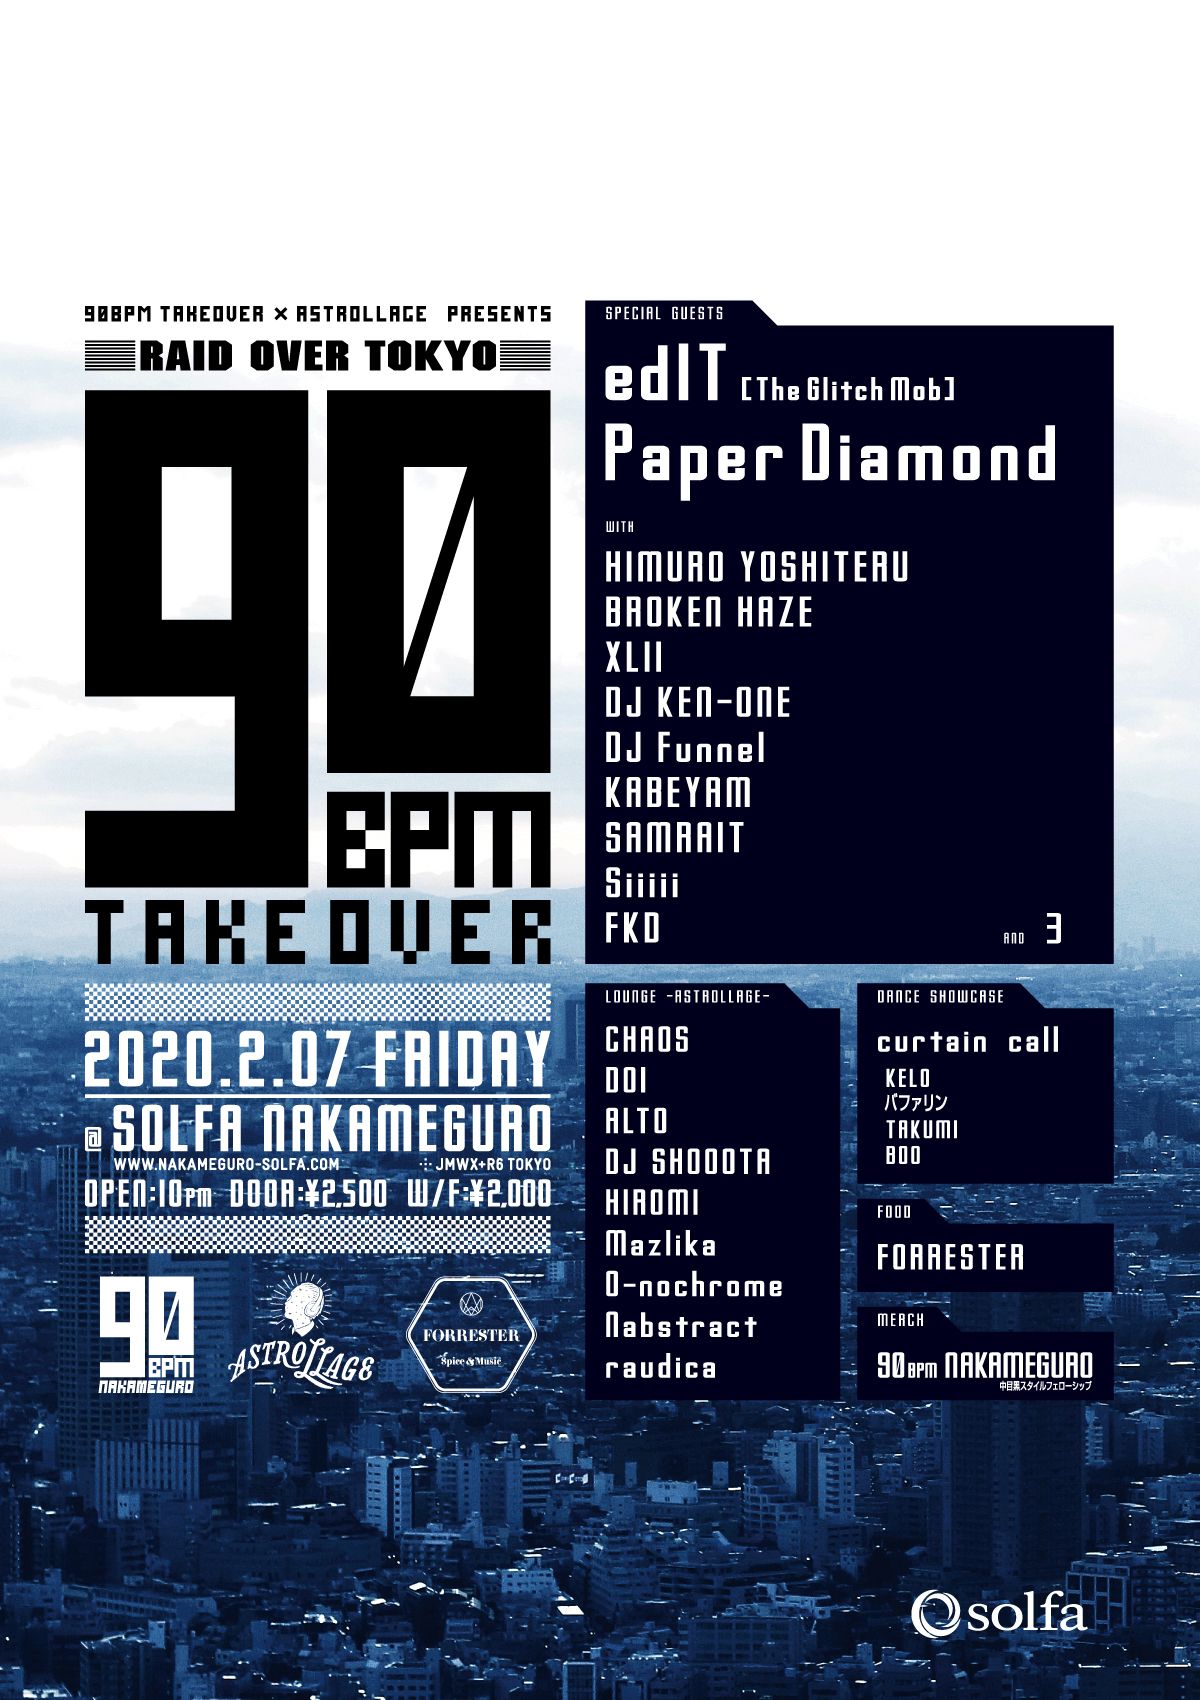 90BPM TAKEOVER presents RAID OVER TOKYO